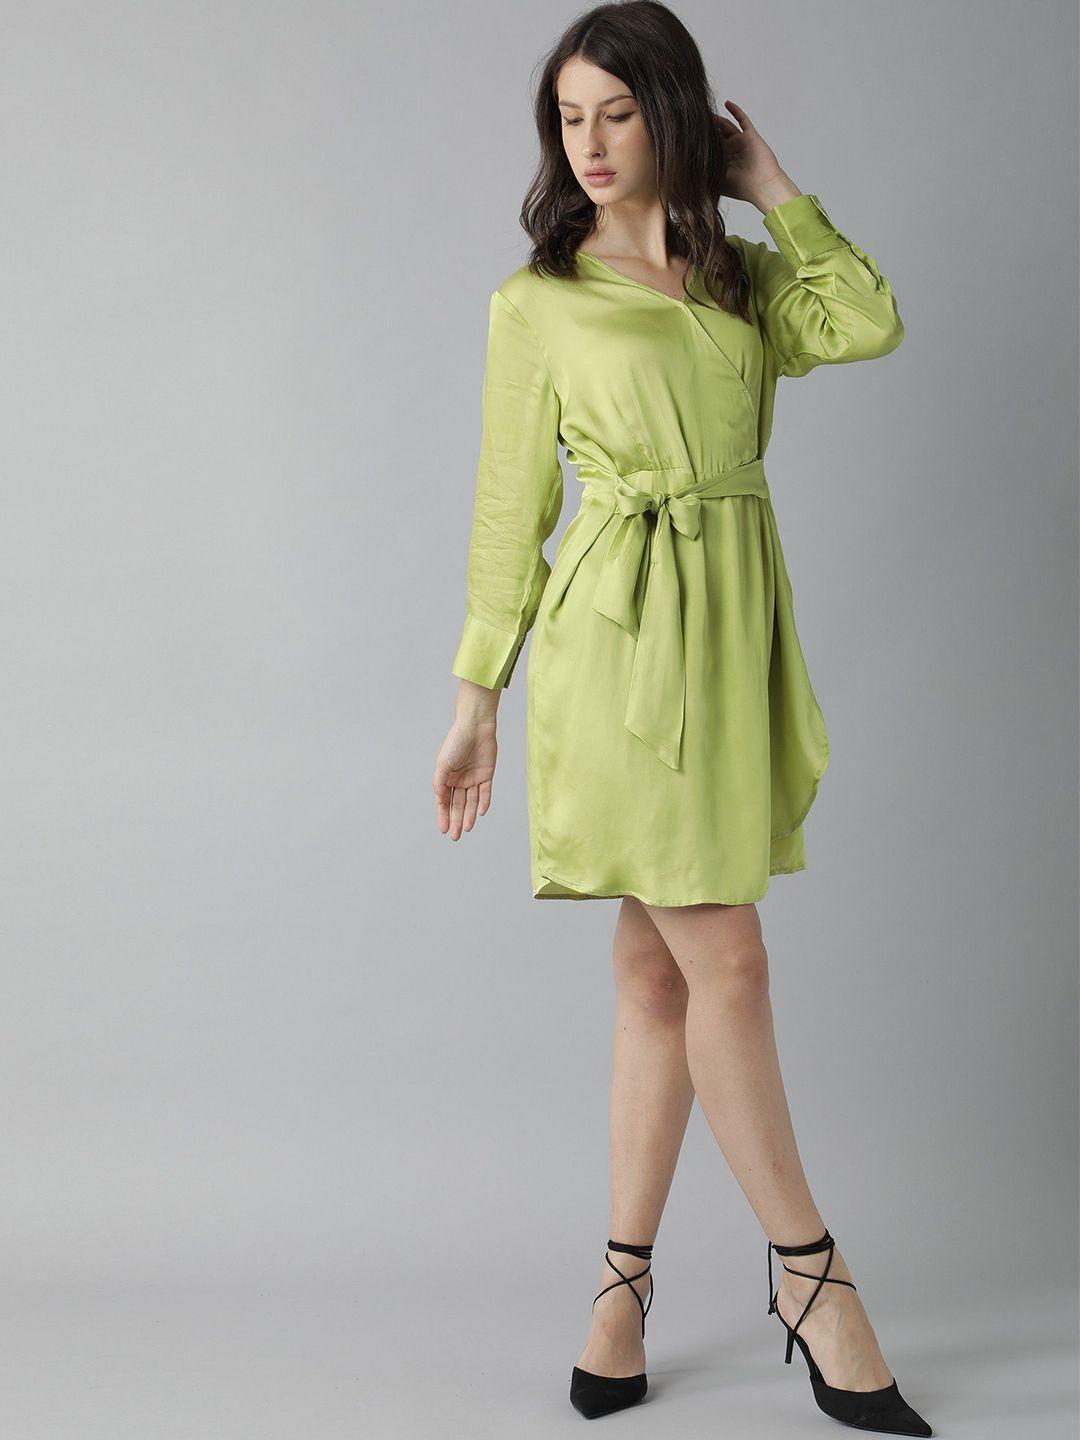 rareism-green-wrap-dress